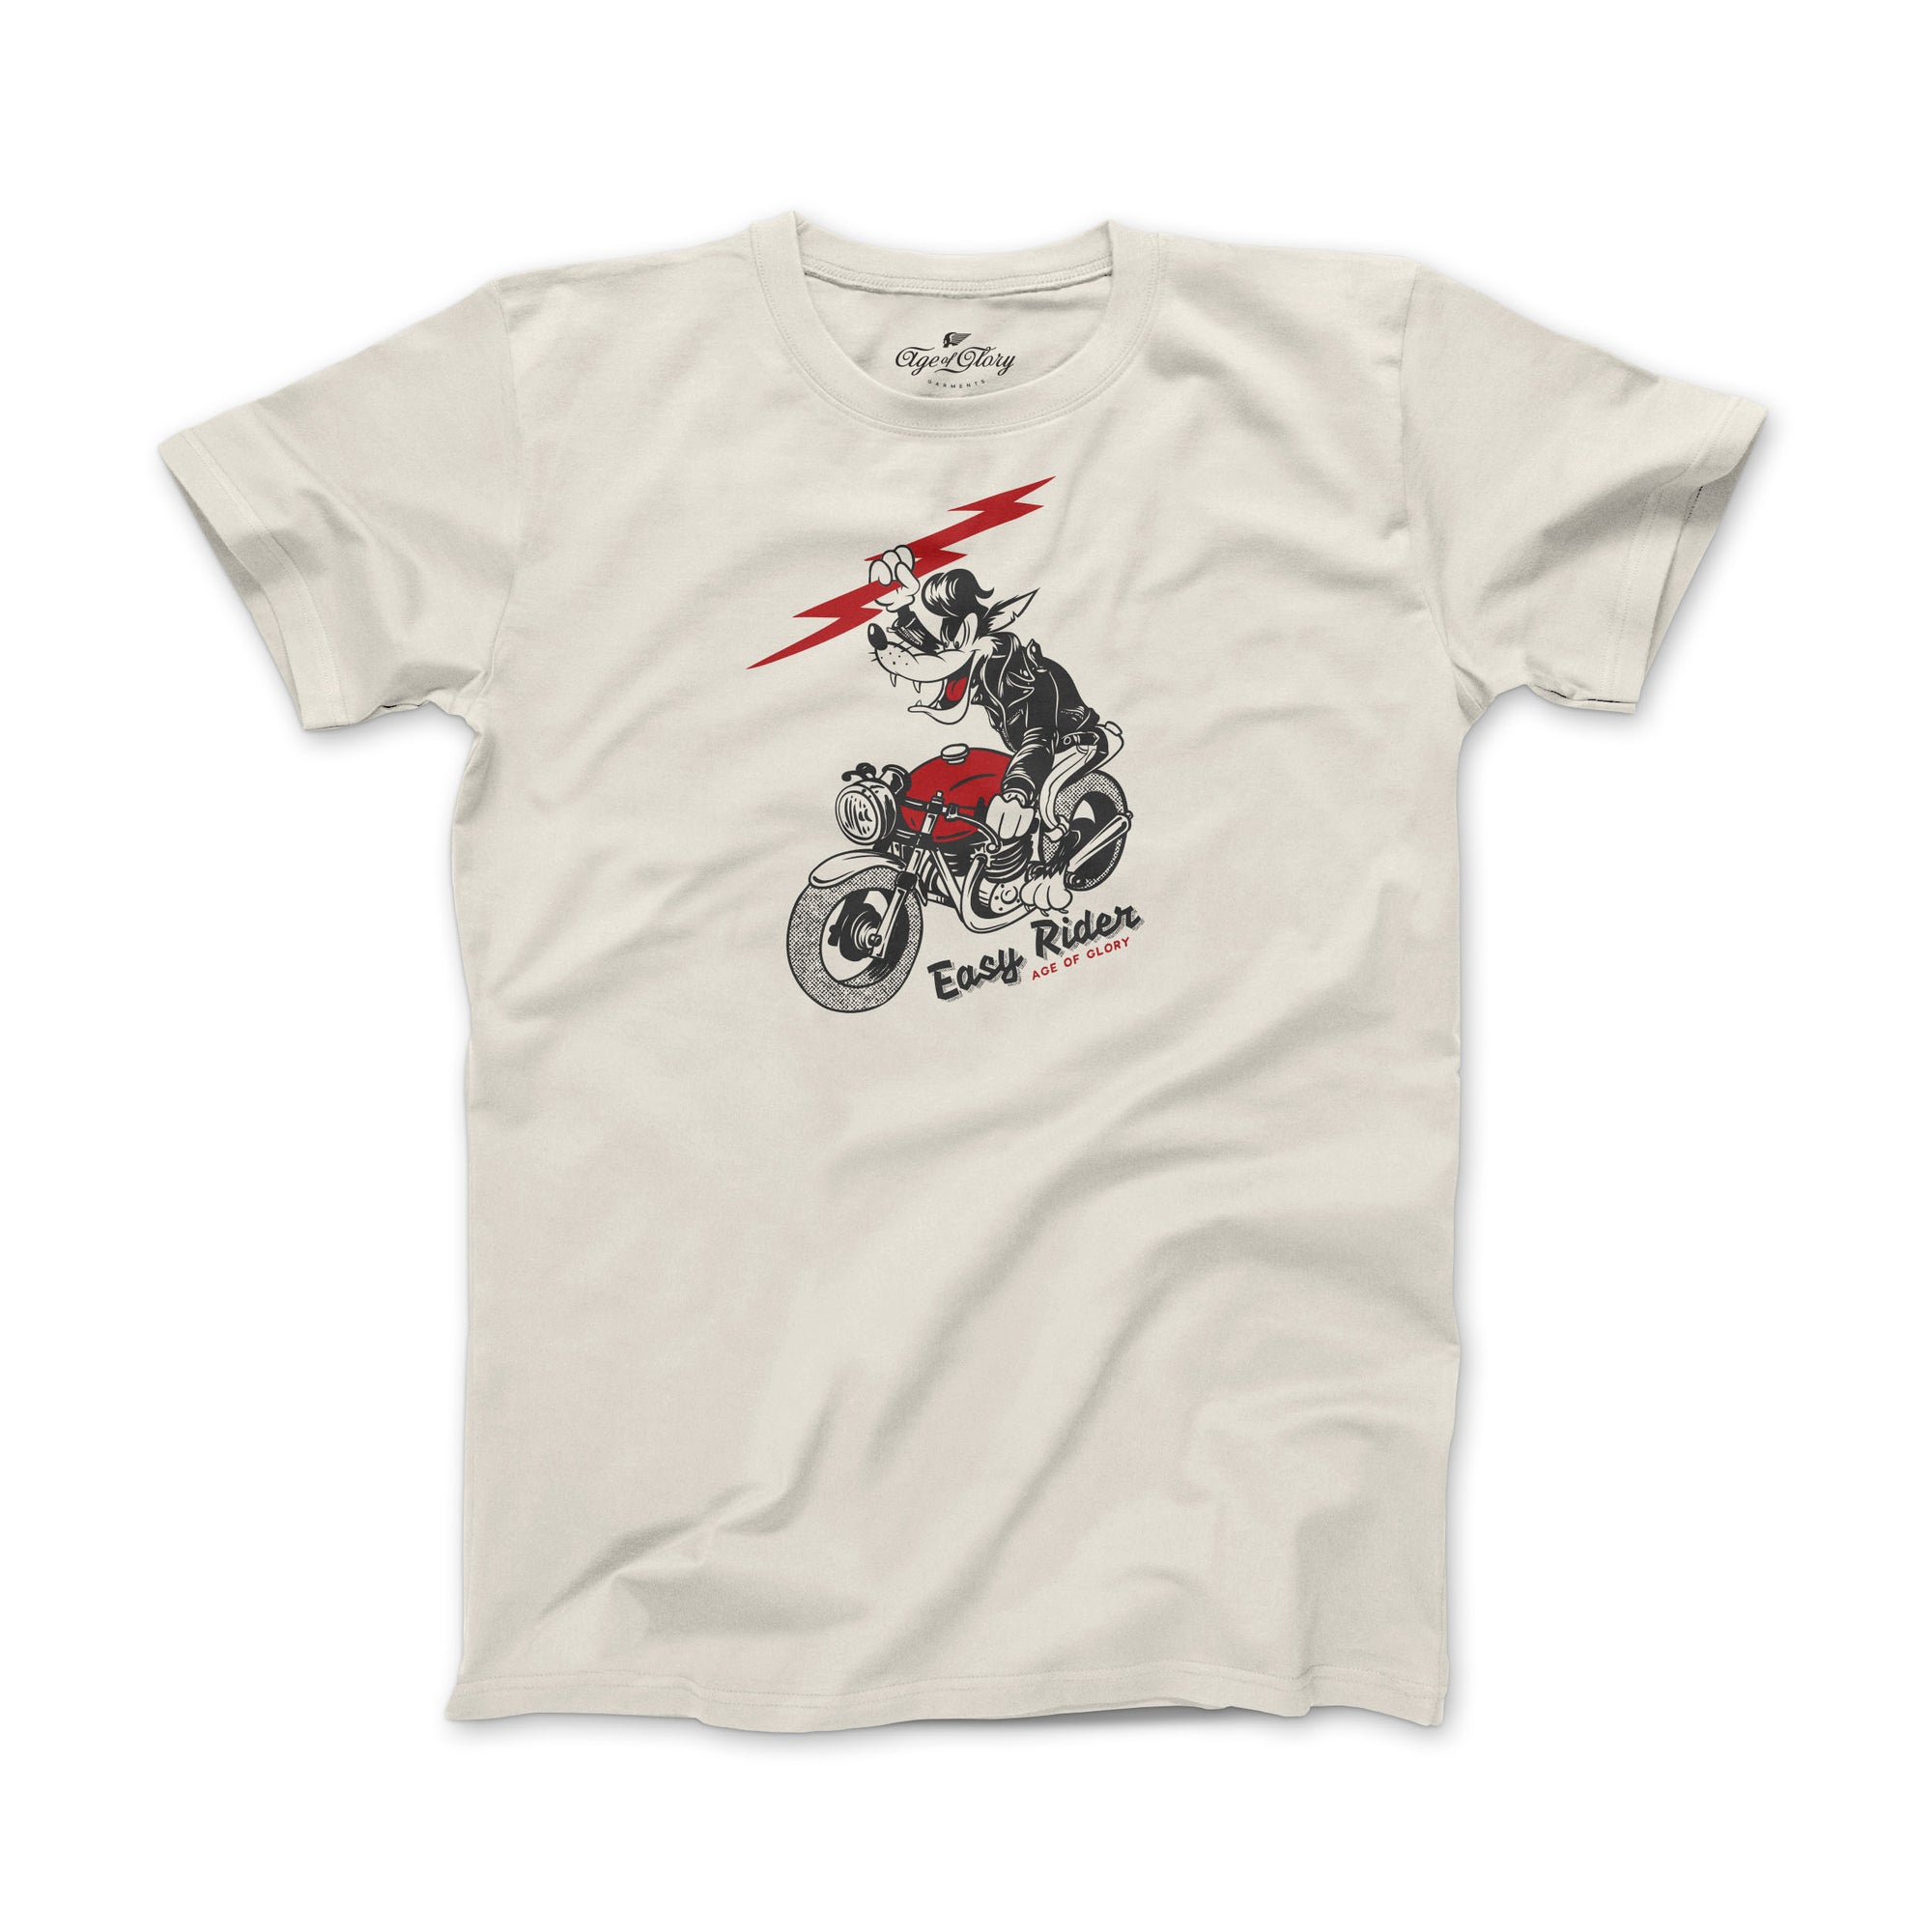 Age of Glory Easy Rider T'Shirt - Salt Flats Clothing